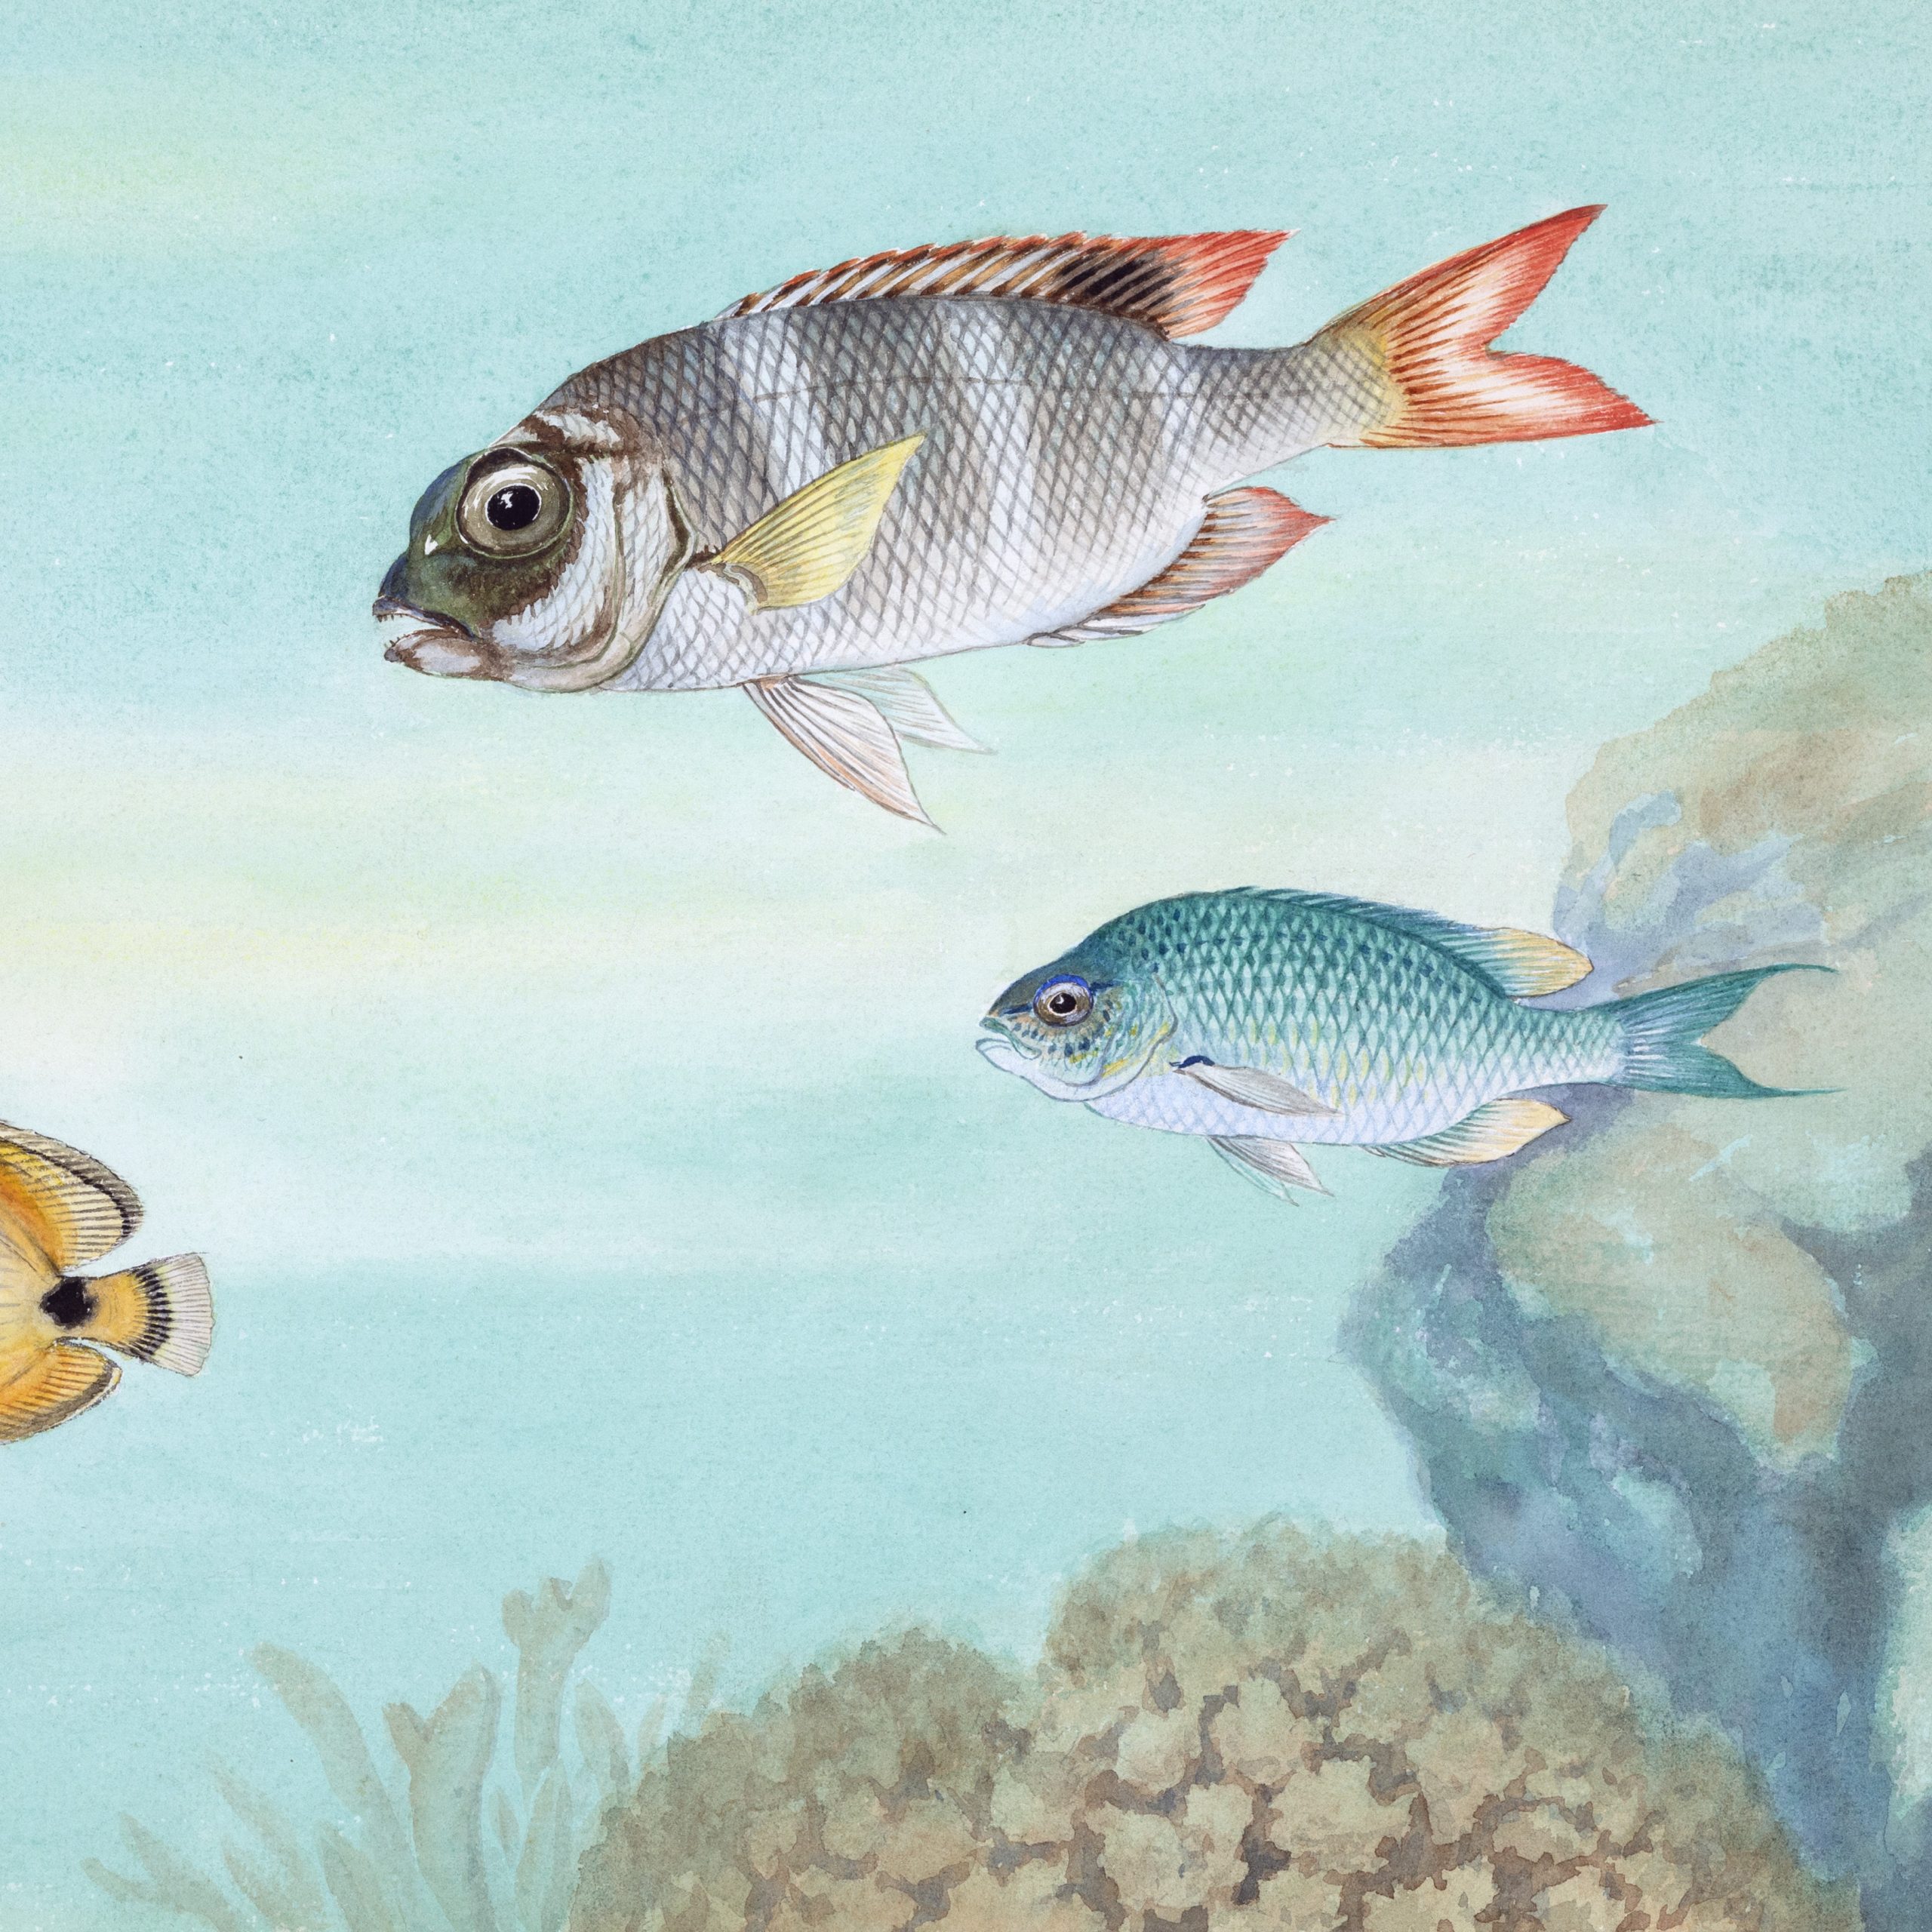 "Coral Reef Fish" painting by Asaeda